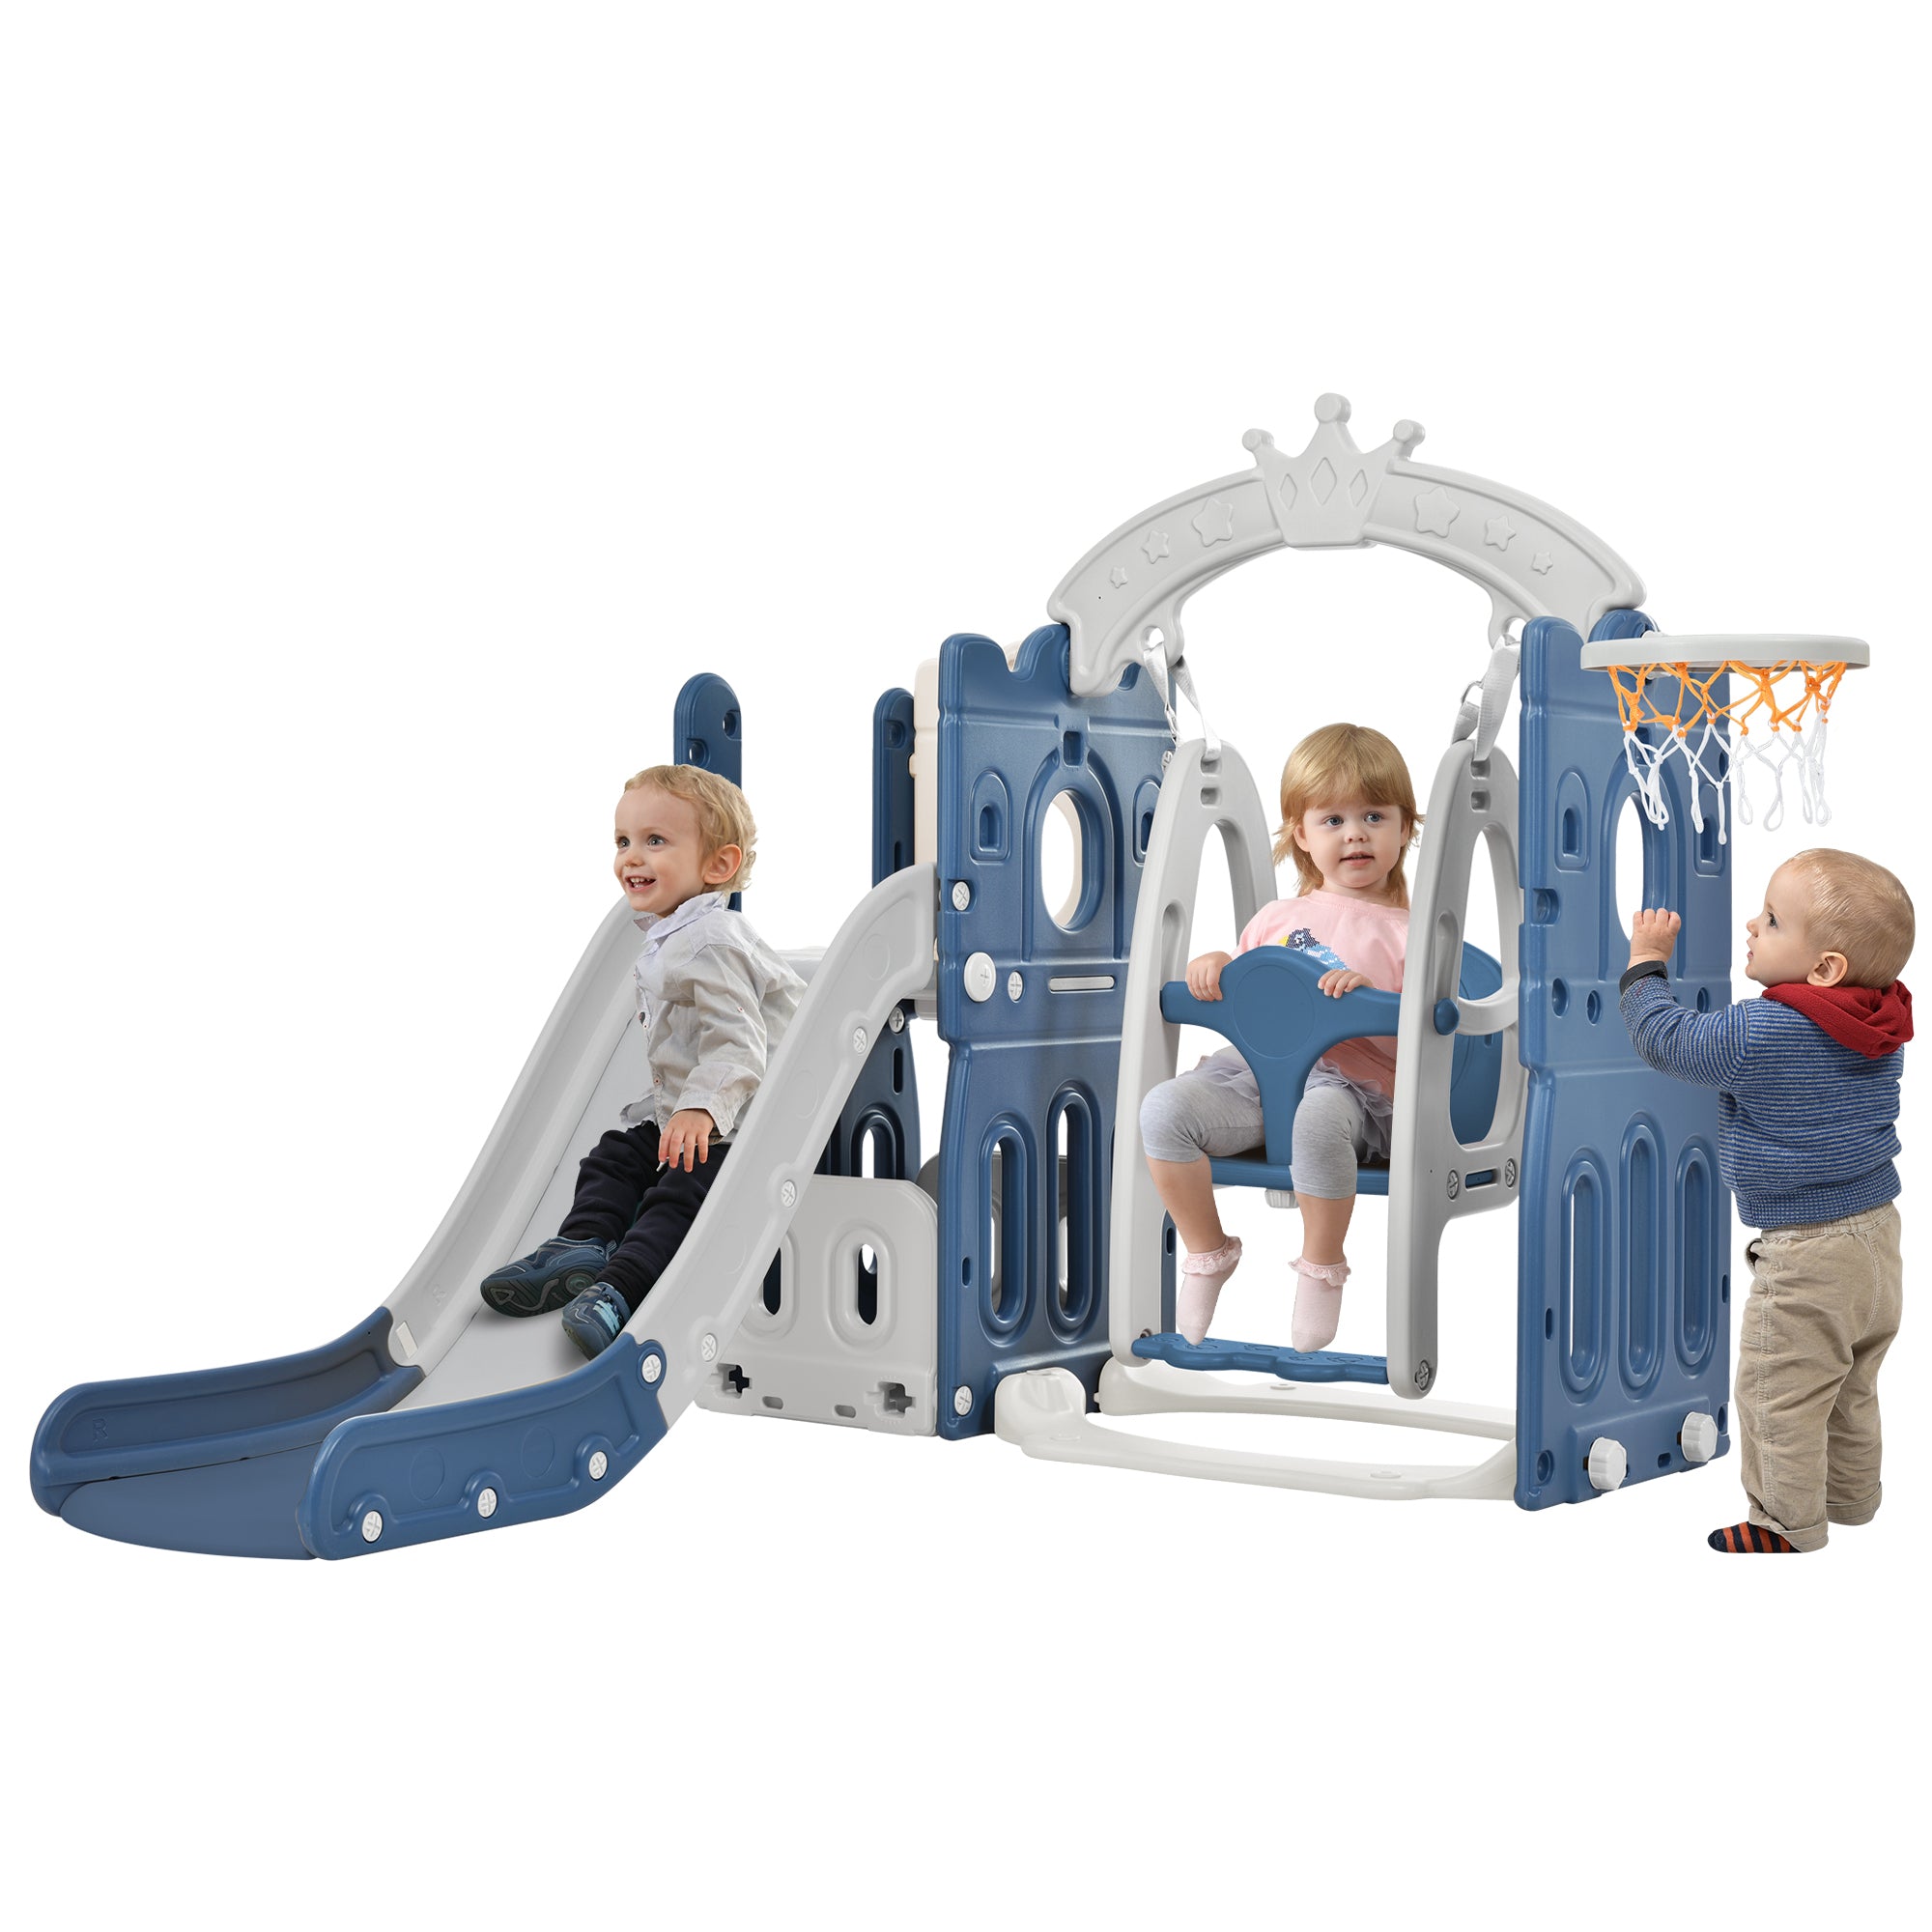 Toddler Slide and Swing Set 5 in 1, Kids Playground